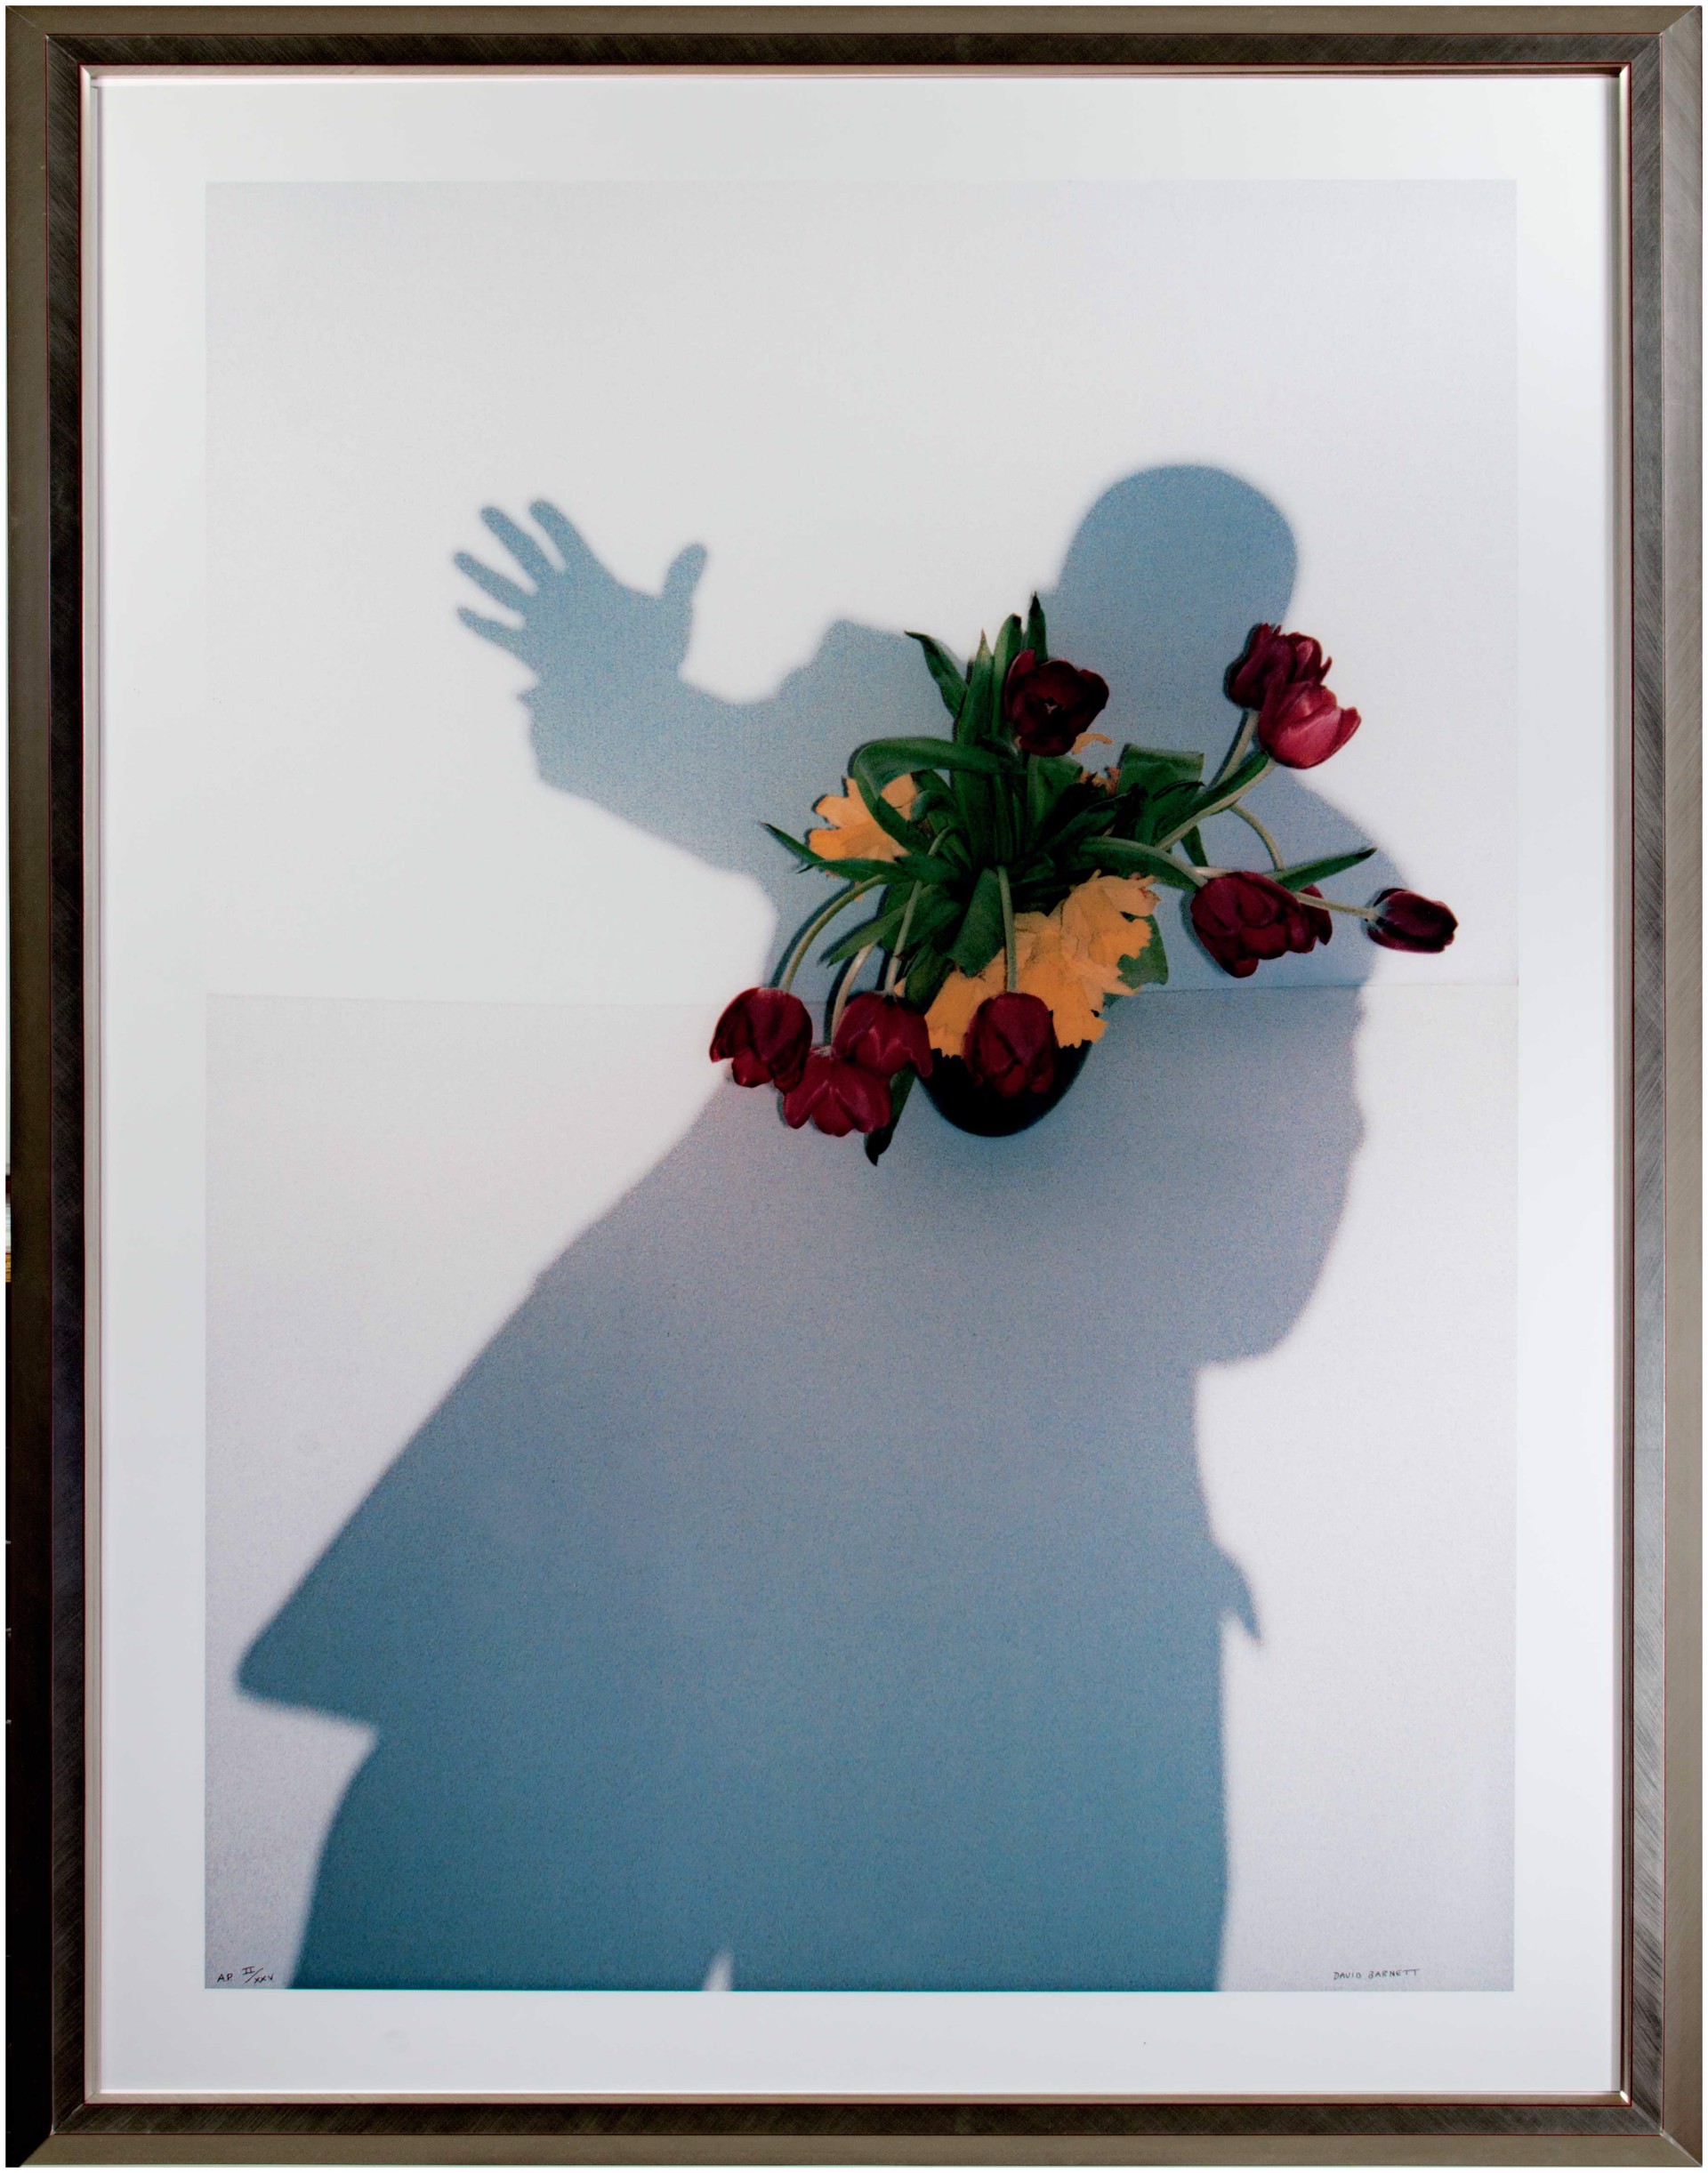 Self Portrait Shadow Series: Take My Hand, I'm a Stranger in Paradise by David Barnett